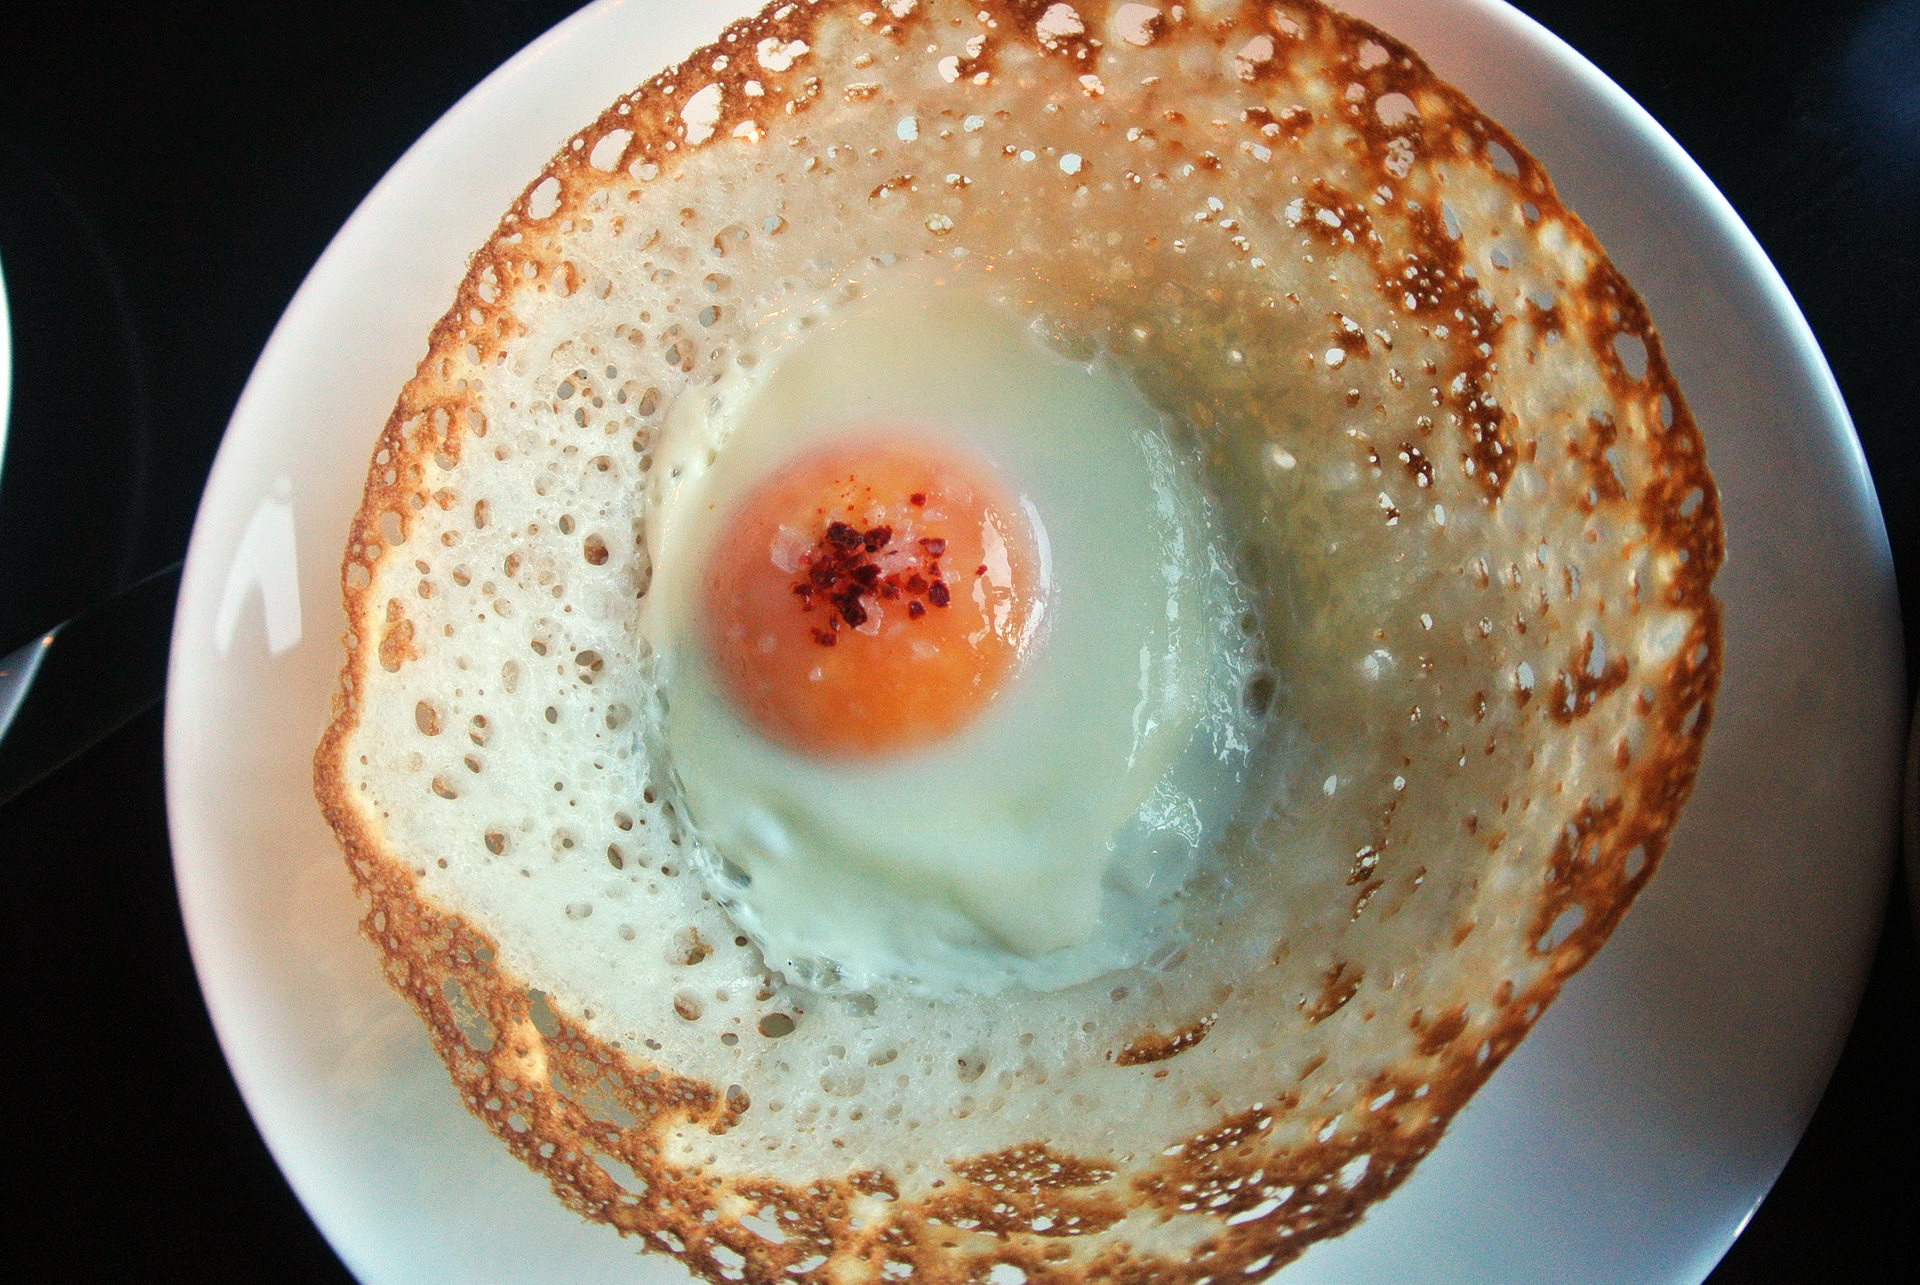 The Egg Hopper at 1601 Bar & Kitchen